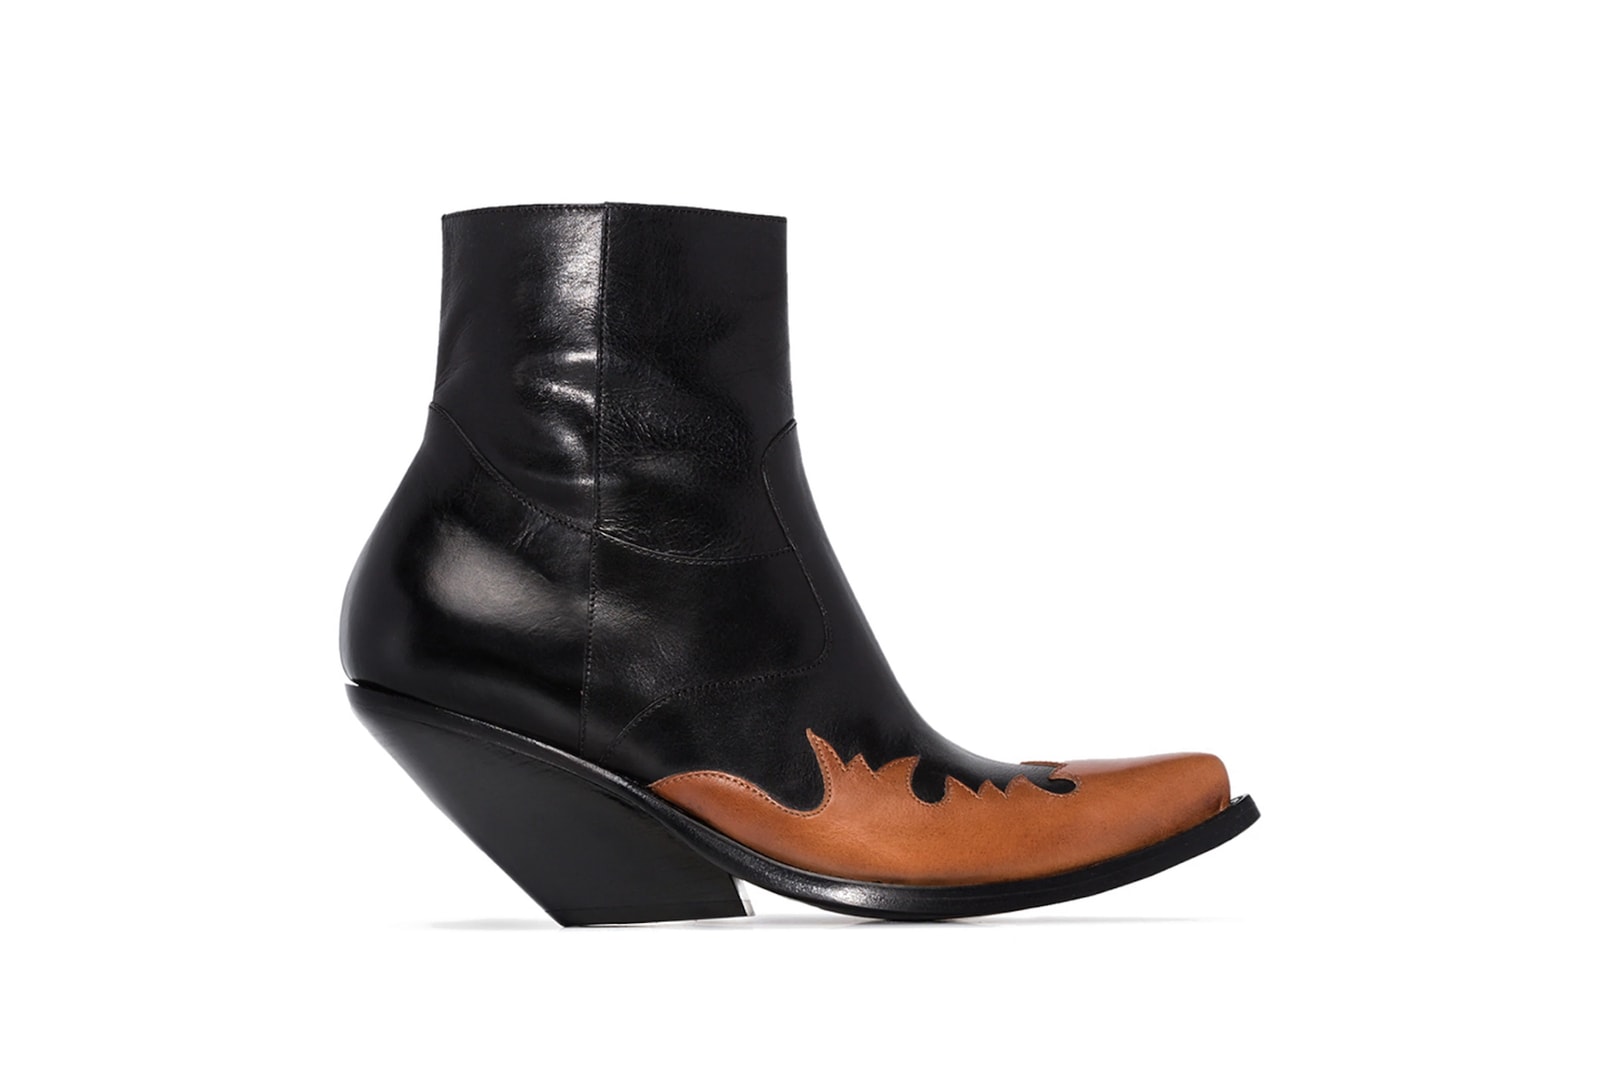 Best Fall Boots From Gucci, Vetements Marine Serre Jil Sander Shoes Fall Winter Footwear Designer Style 